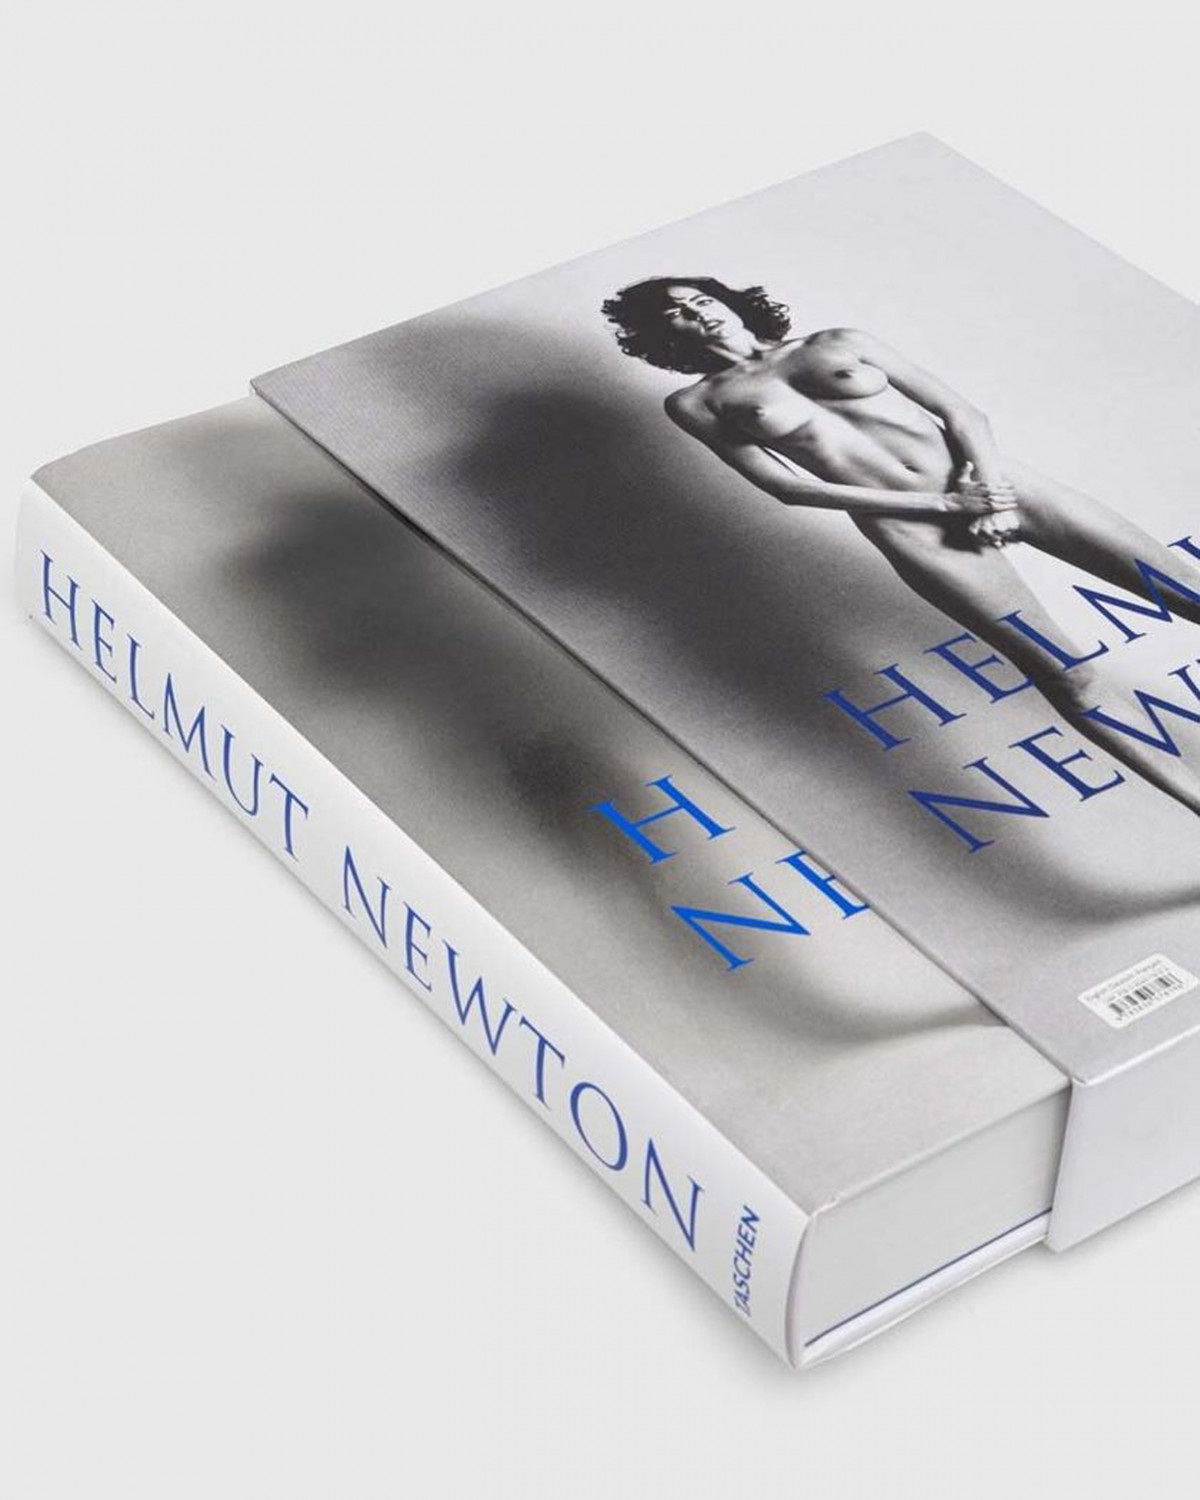 Альбом Helmut Newton SUMO 20th Anniversary